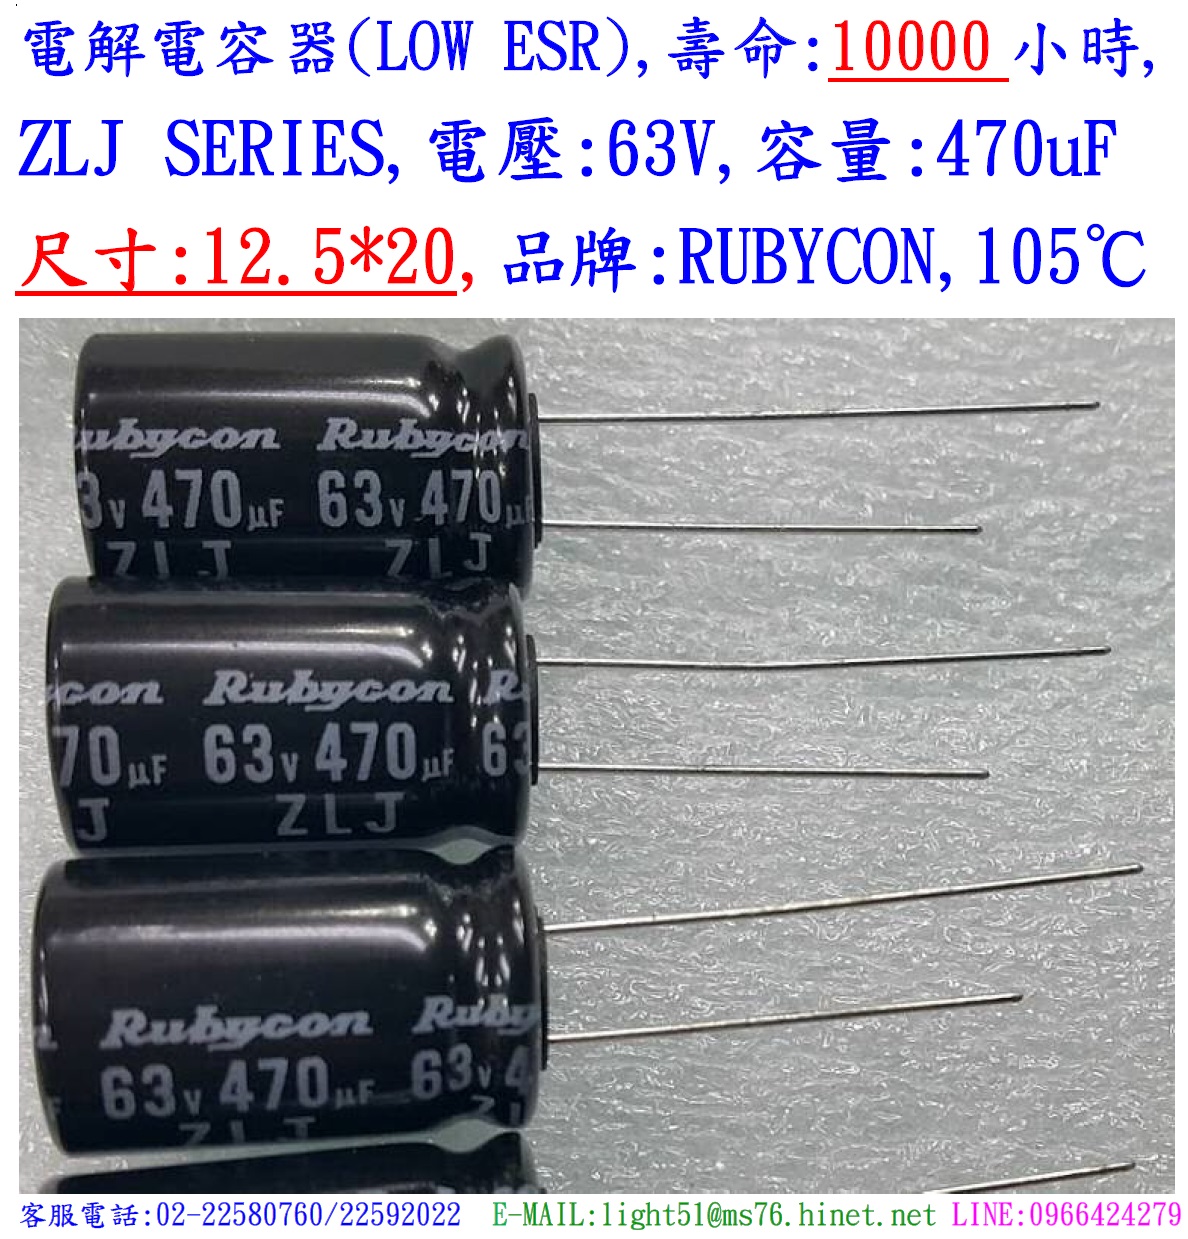 ZLJ,63V,470uF,尺寸:12.5*20,電解電容器(LOW ESR),壽命:10000小時,Rubycon